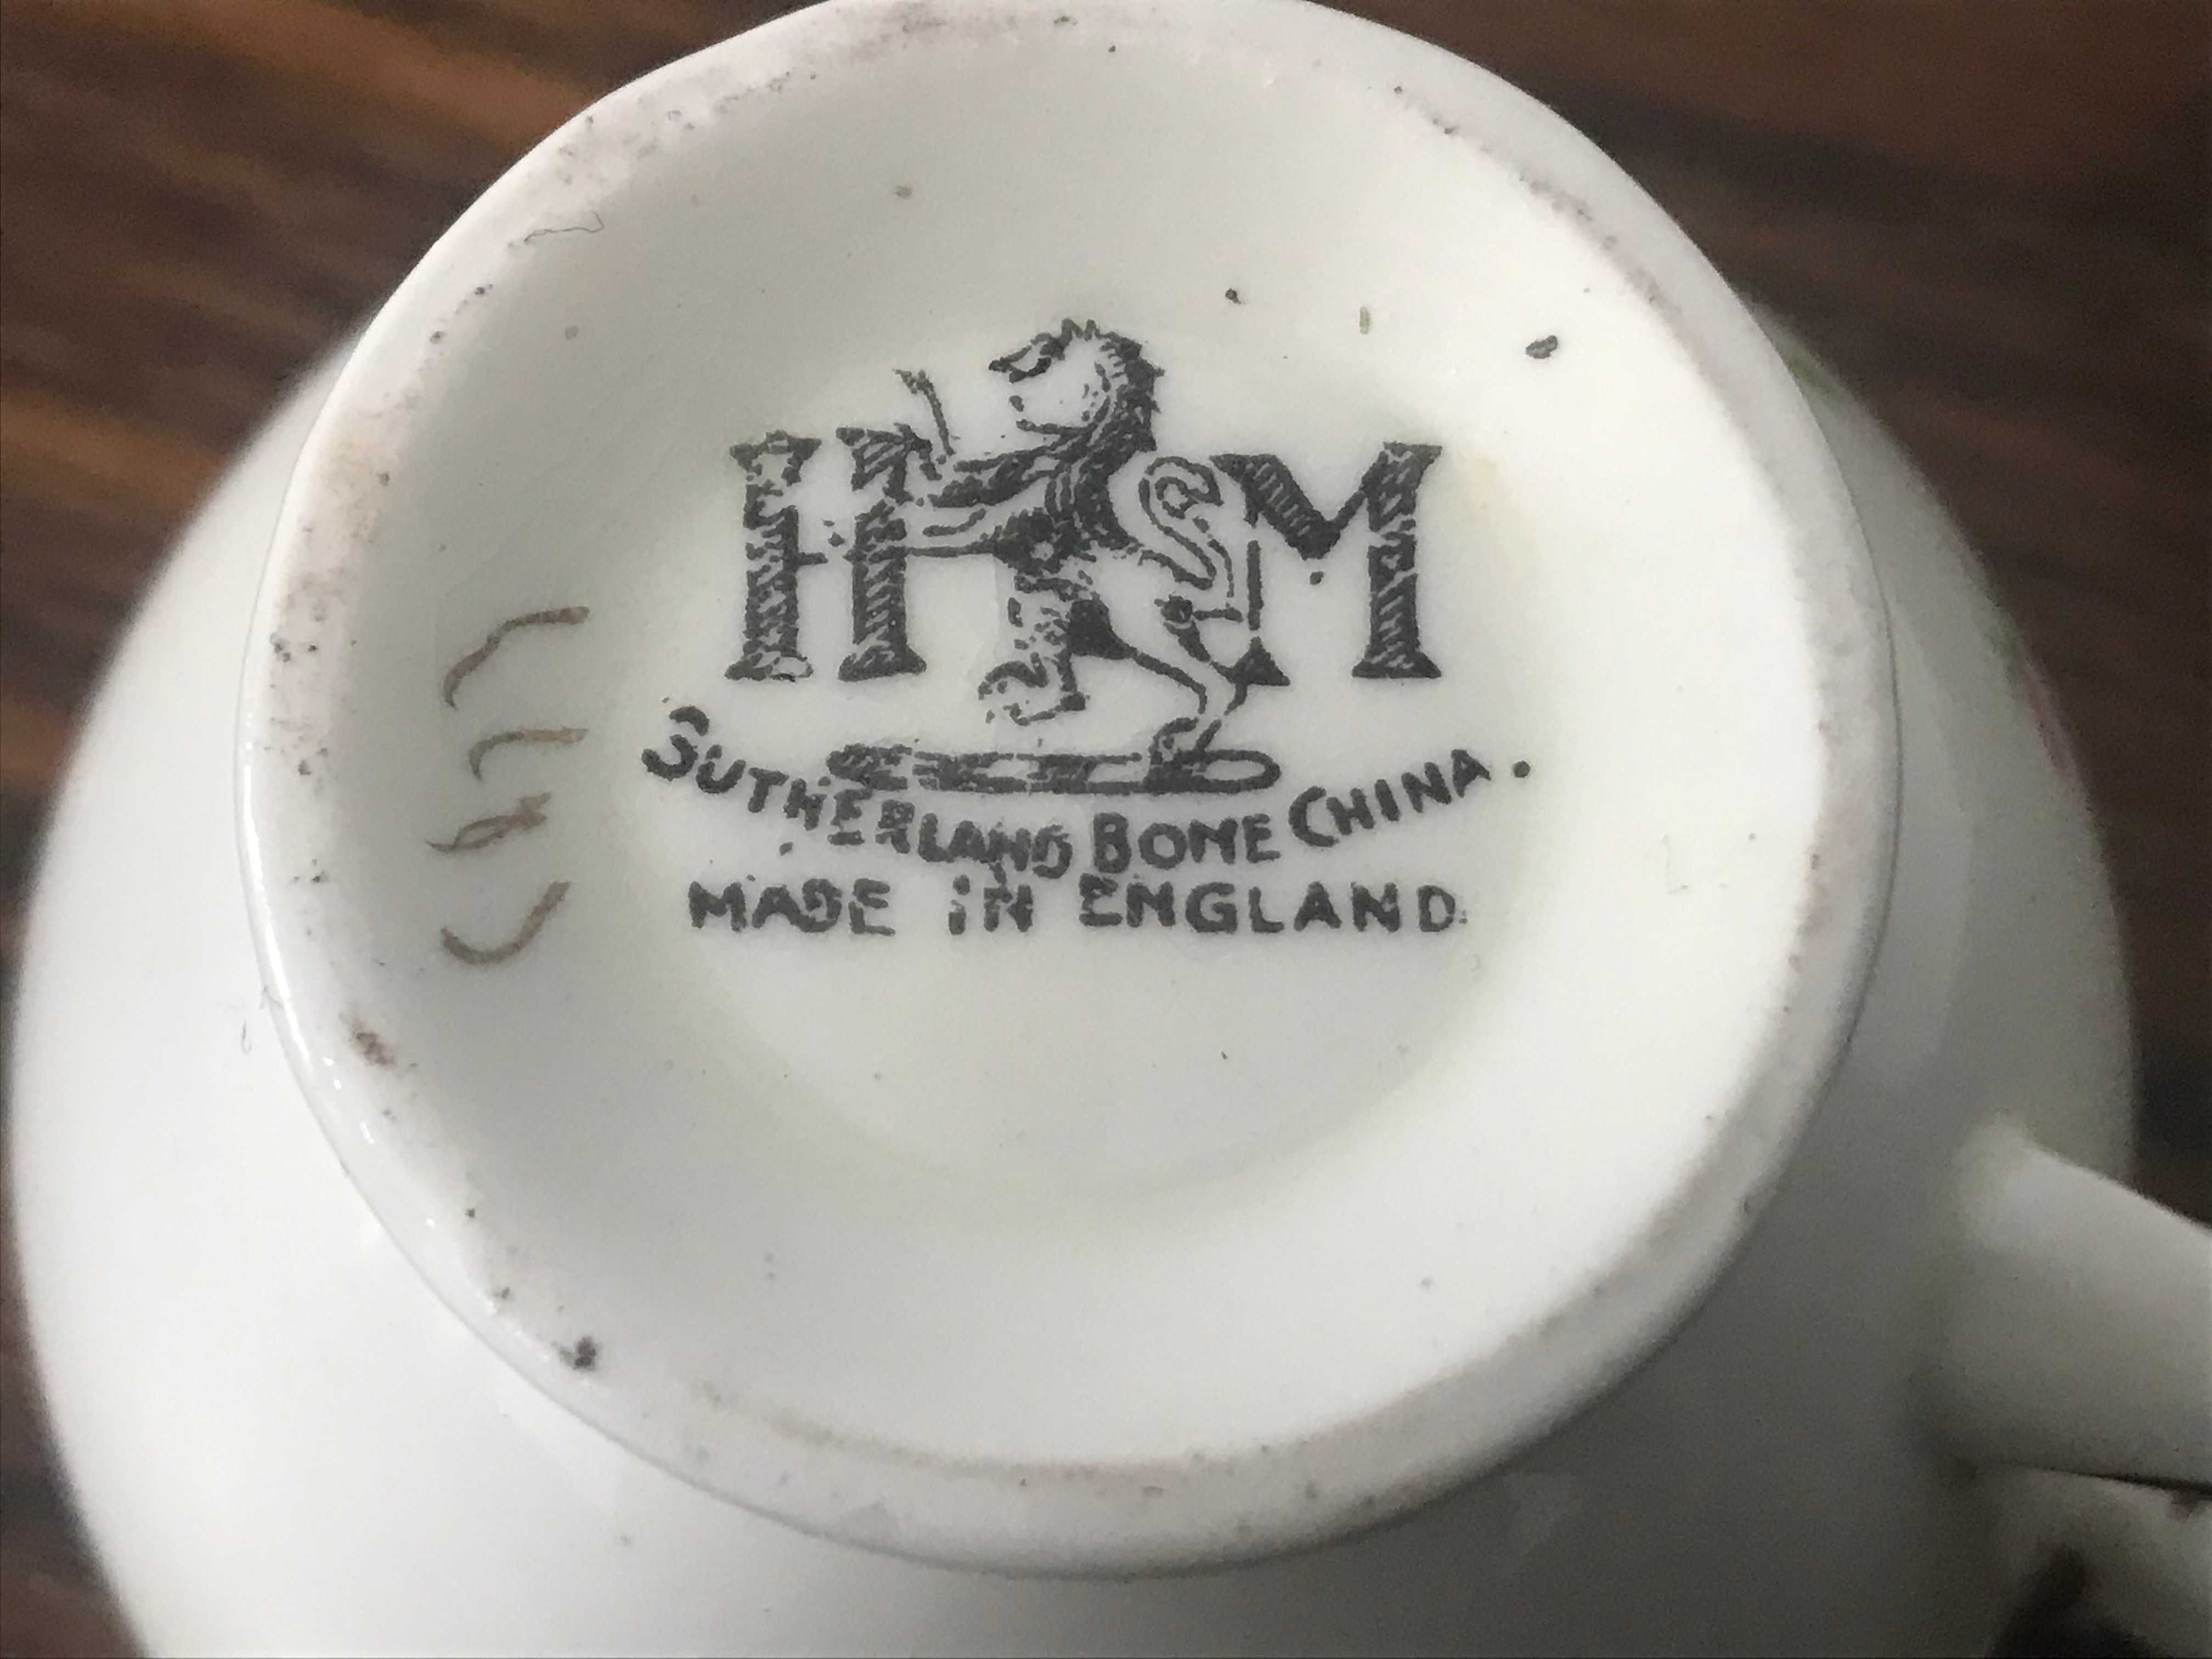 filiżanka porcelanowa HM sutherland bone china vintage prl